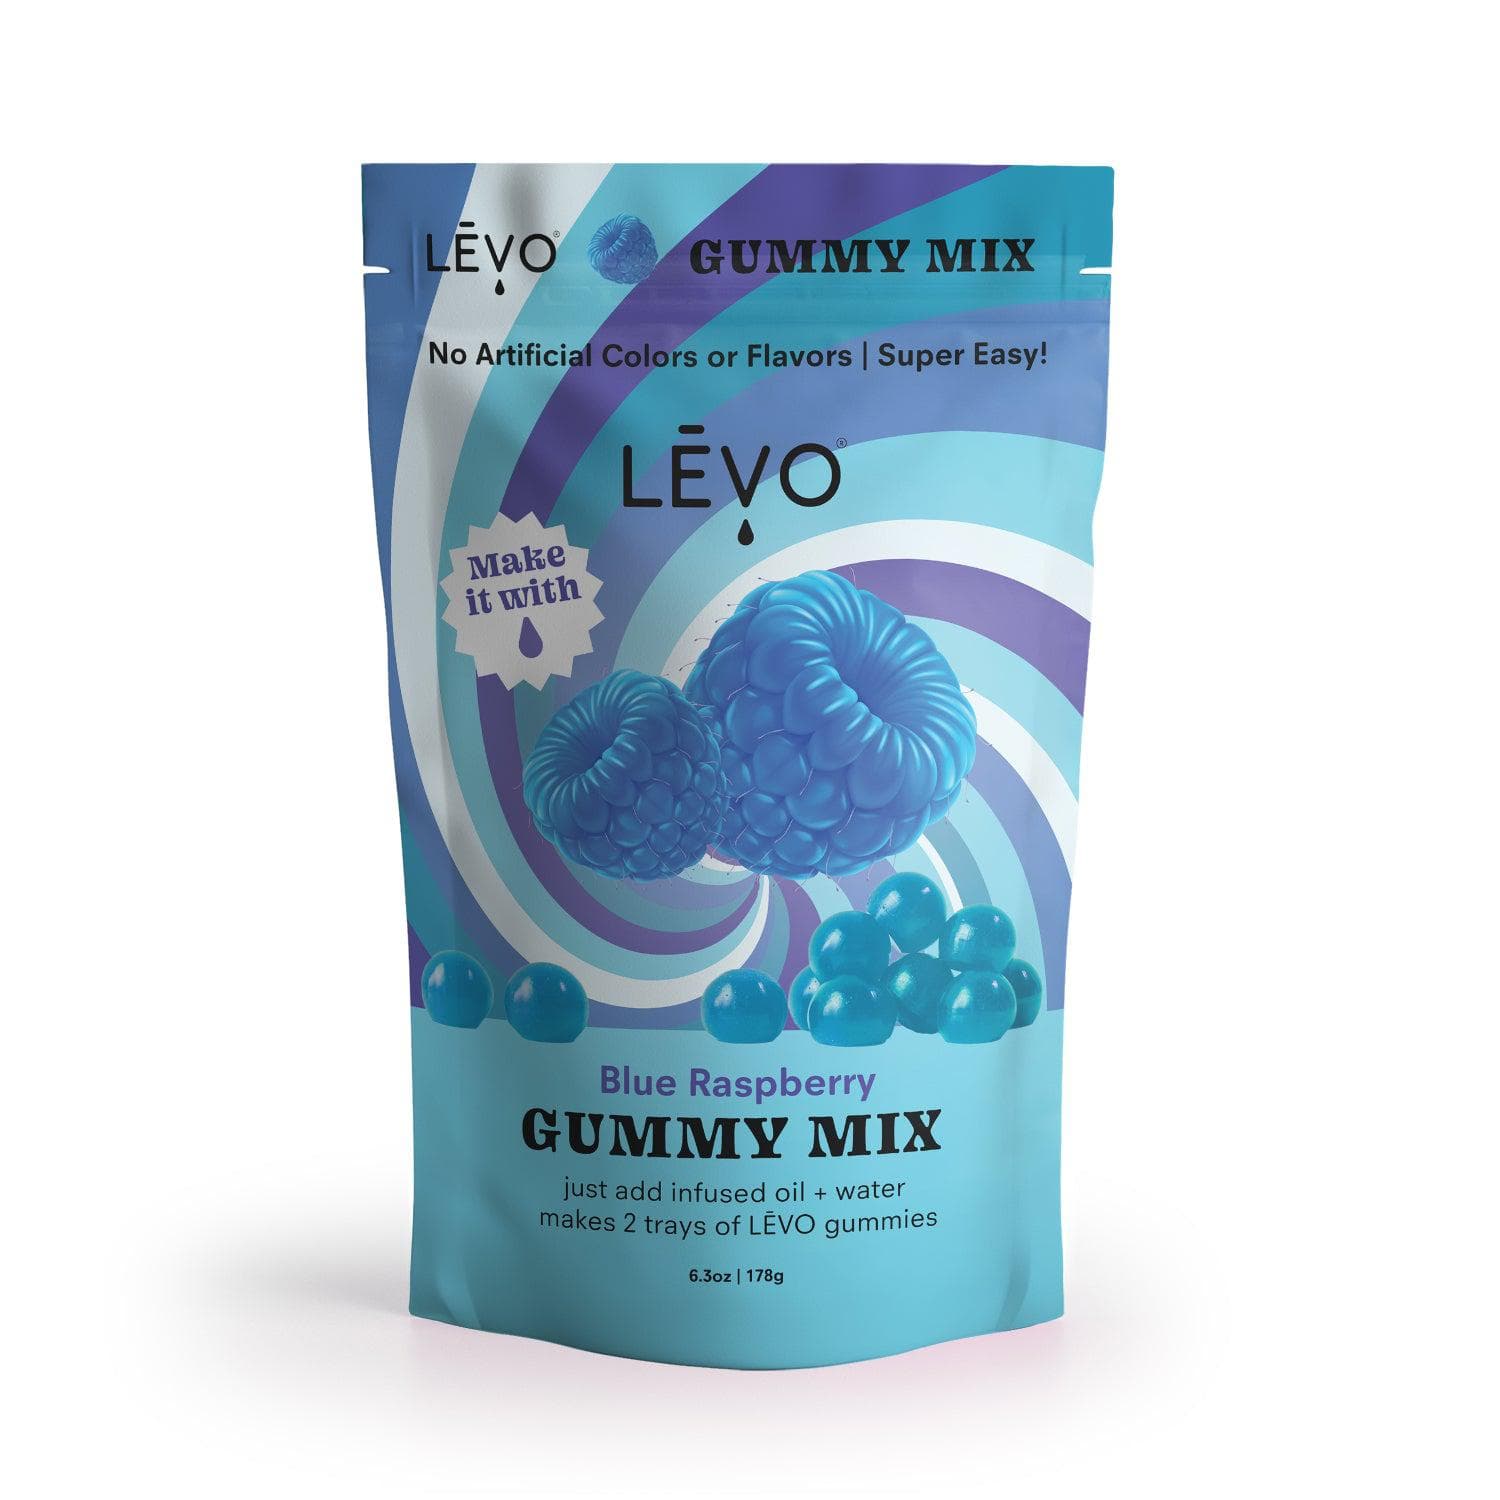 LEVO Gummy Mix in Blue Raspberry flavor - front 